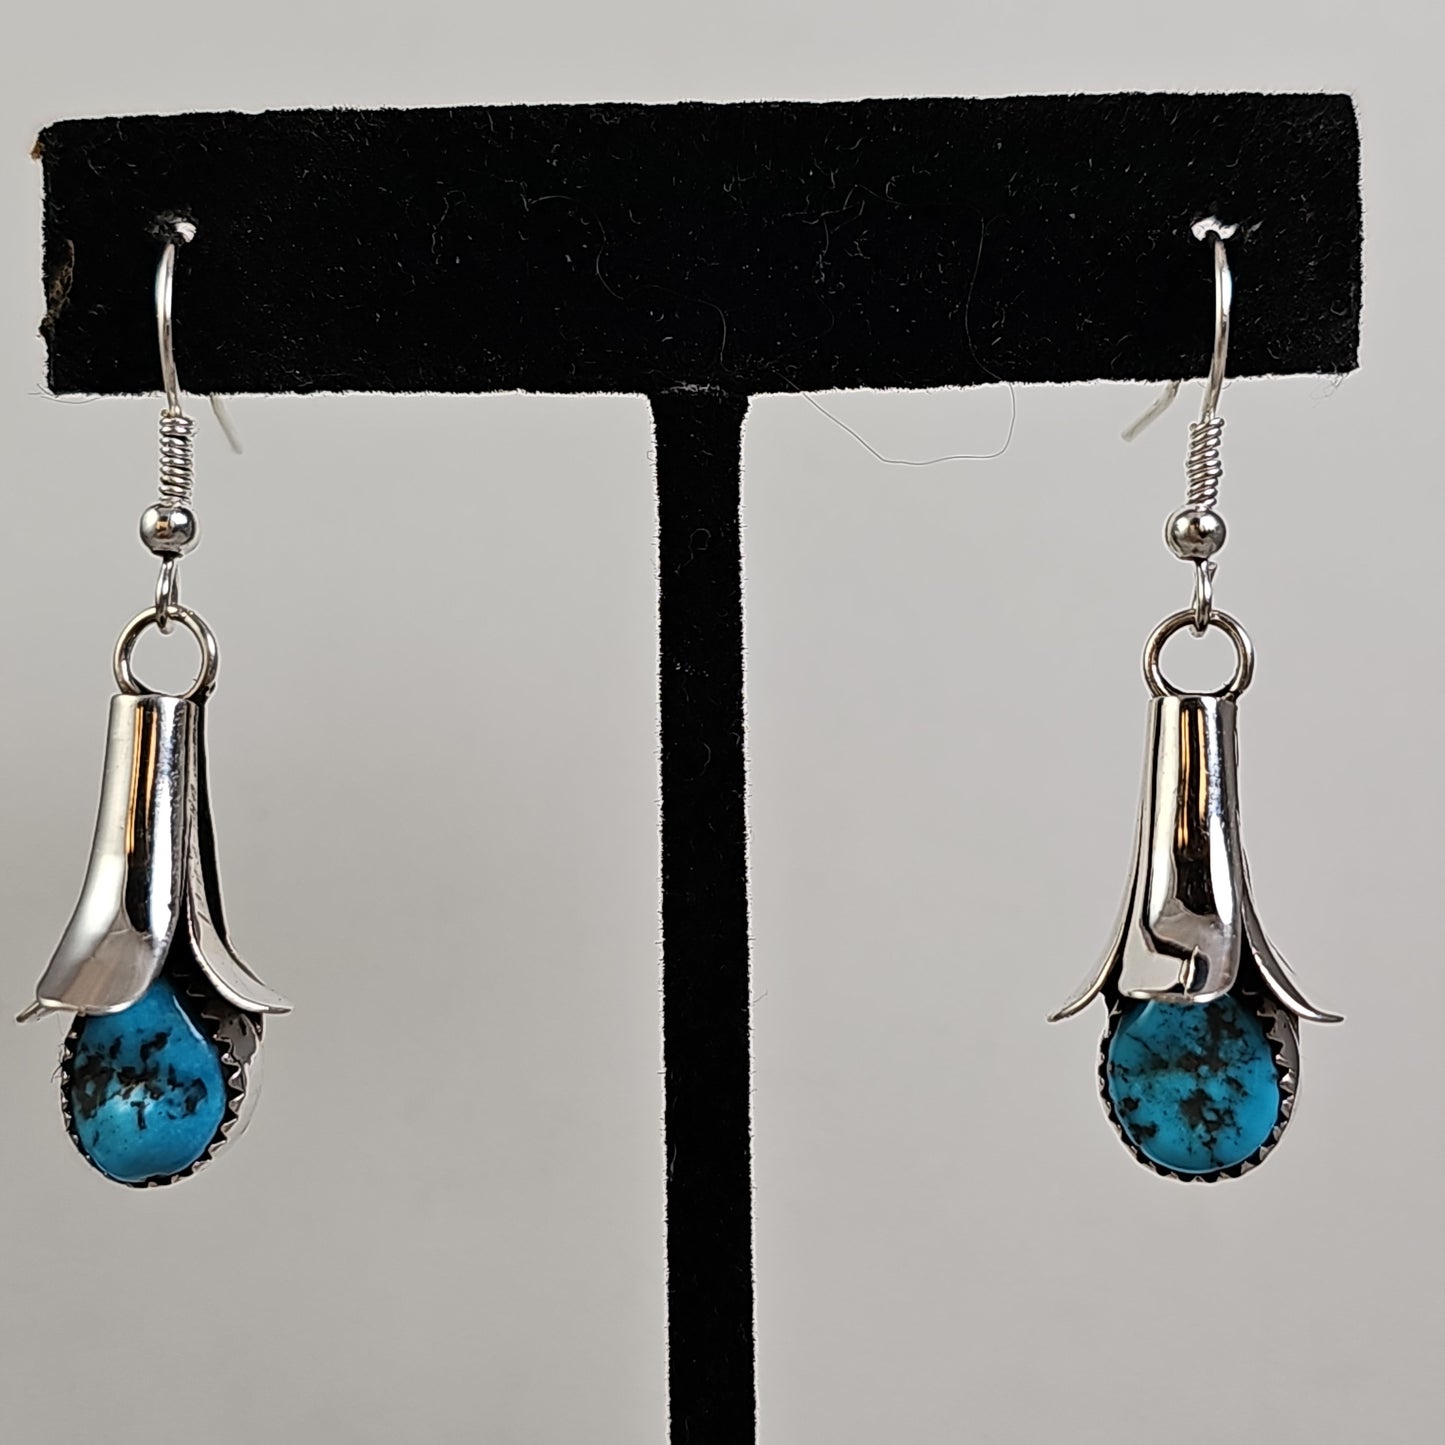 Turquoise blossom earrings